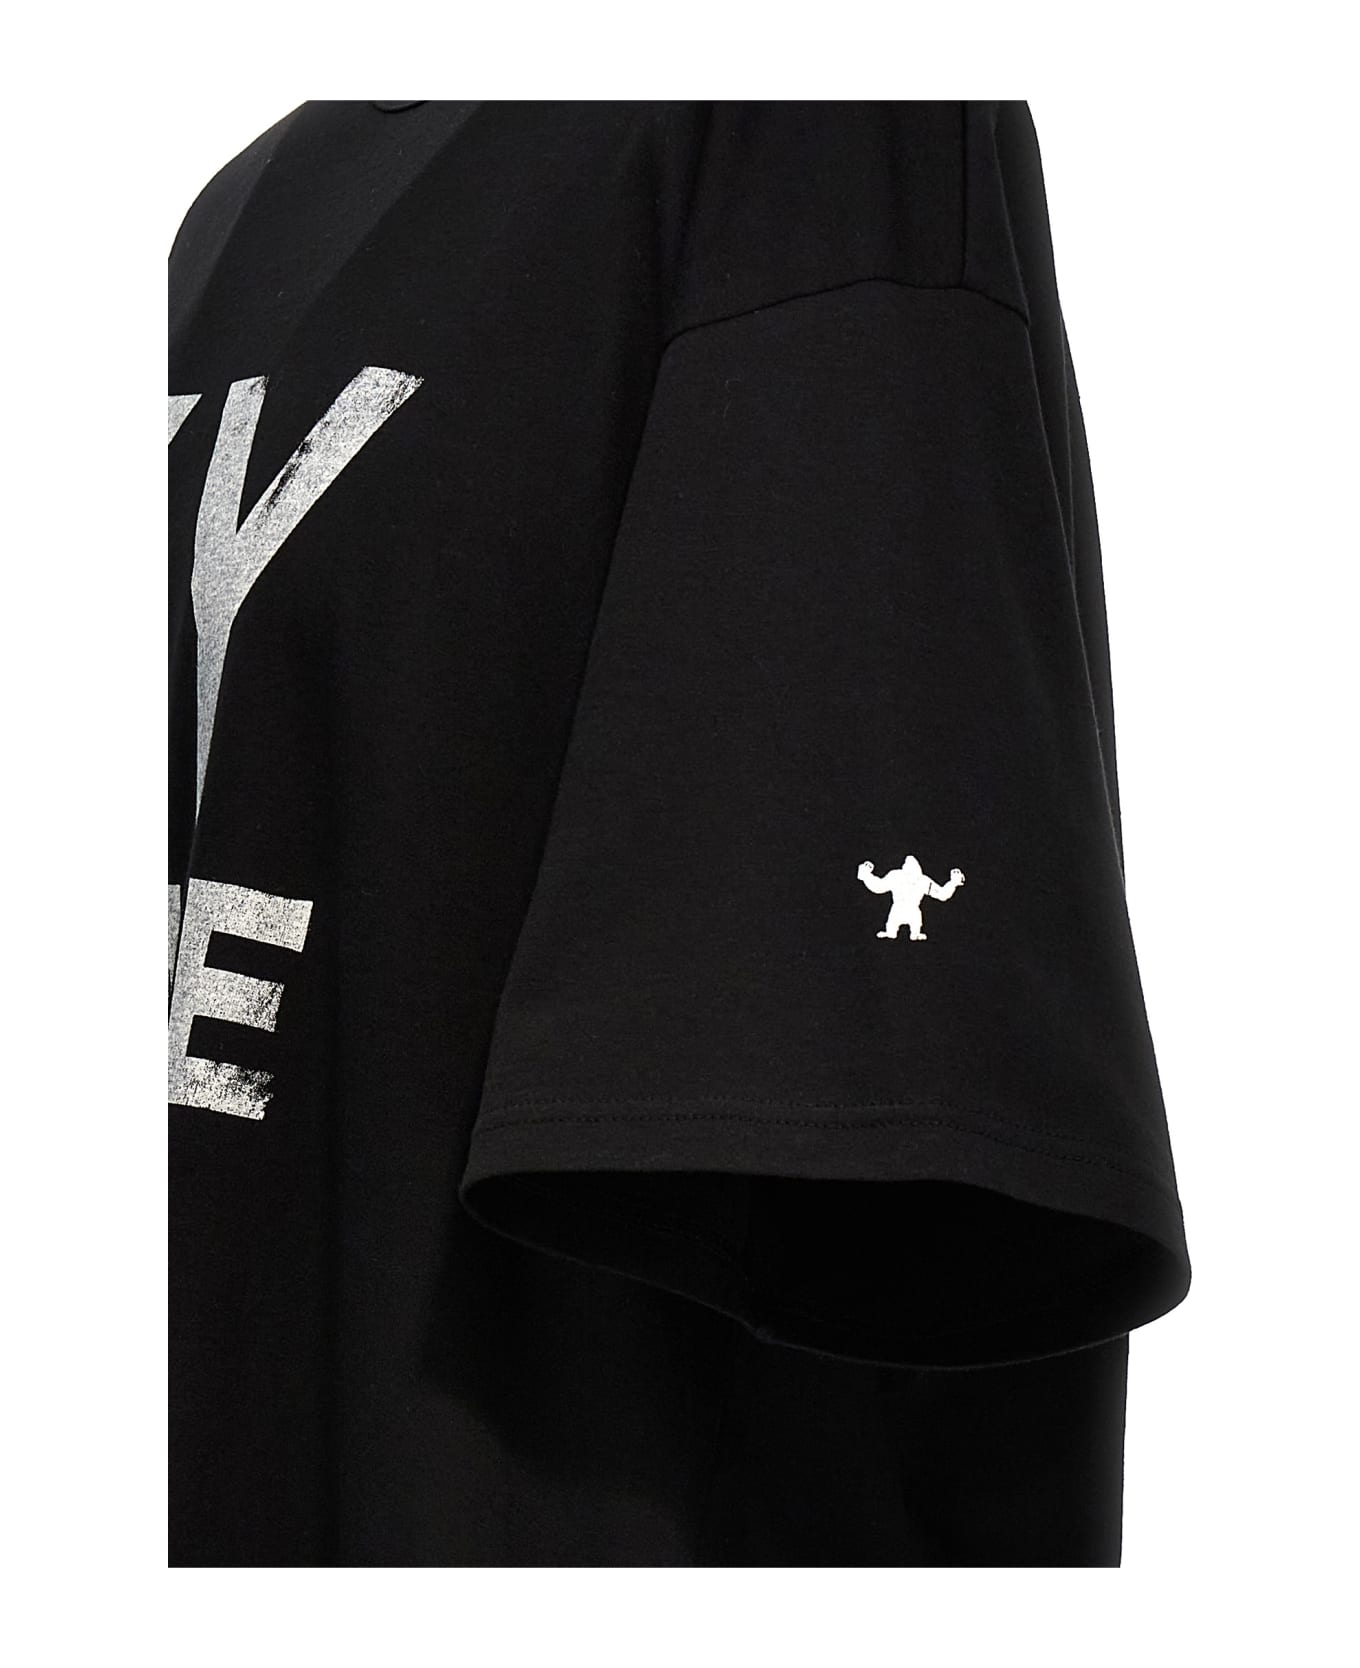 Yohji Yamamoto Logo Print T-shirt - Black  